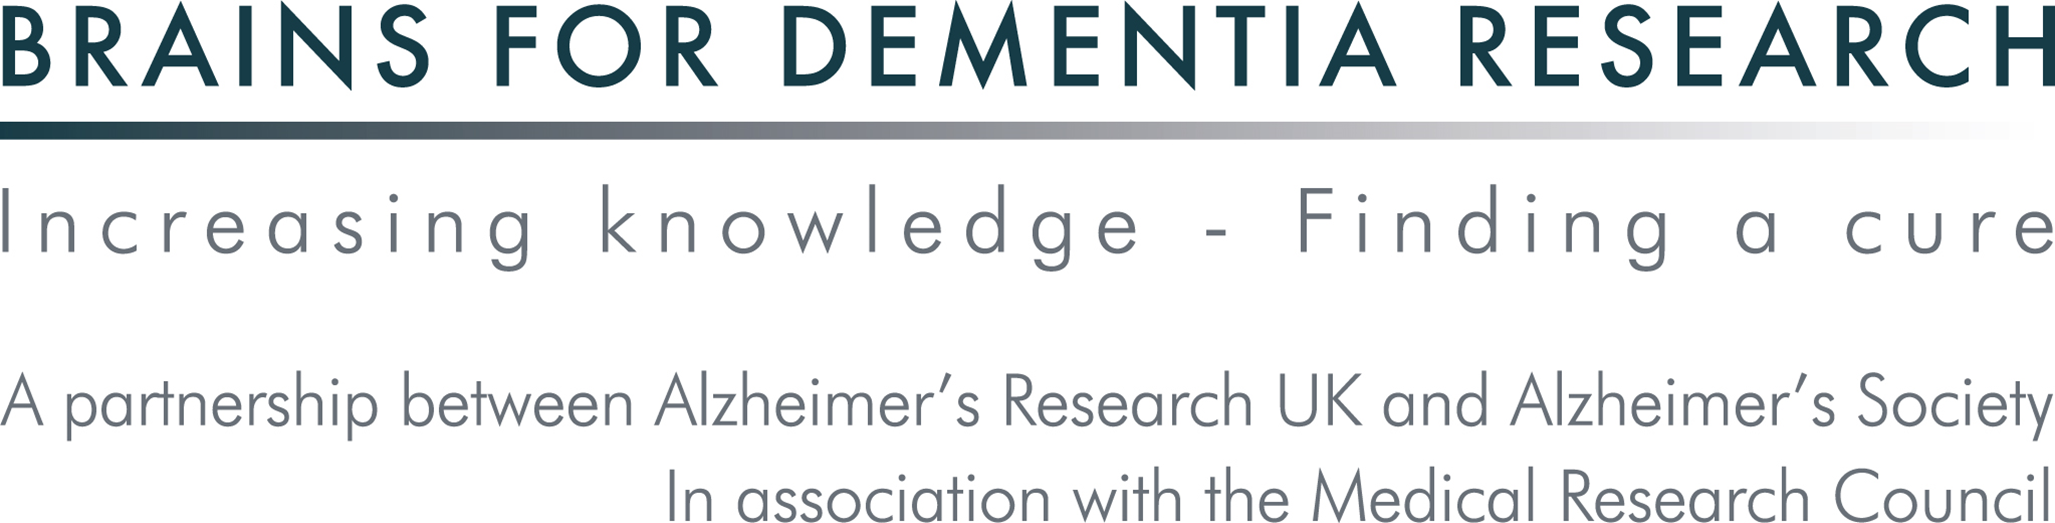 Brains for Dementia Research logo